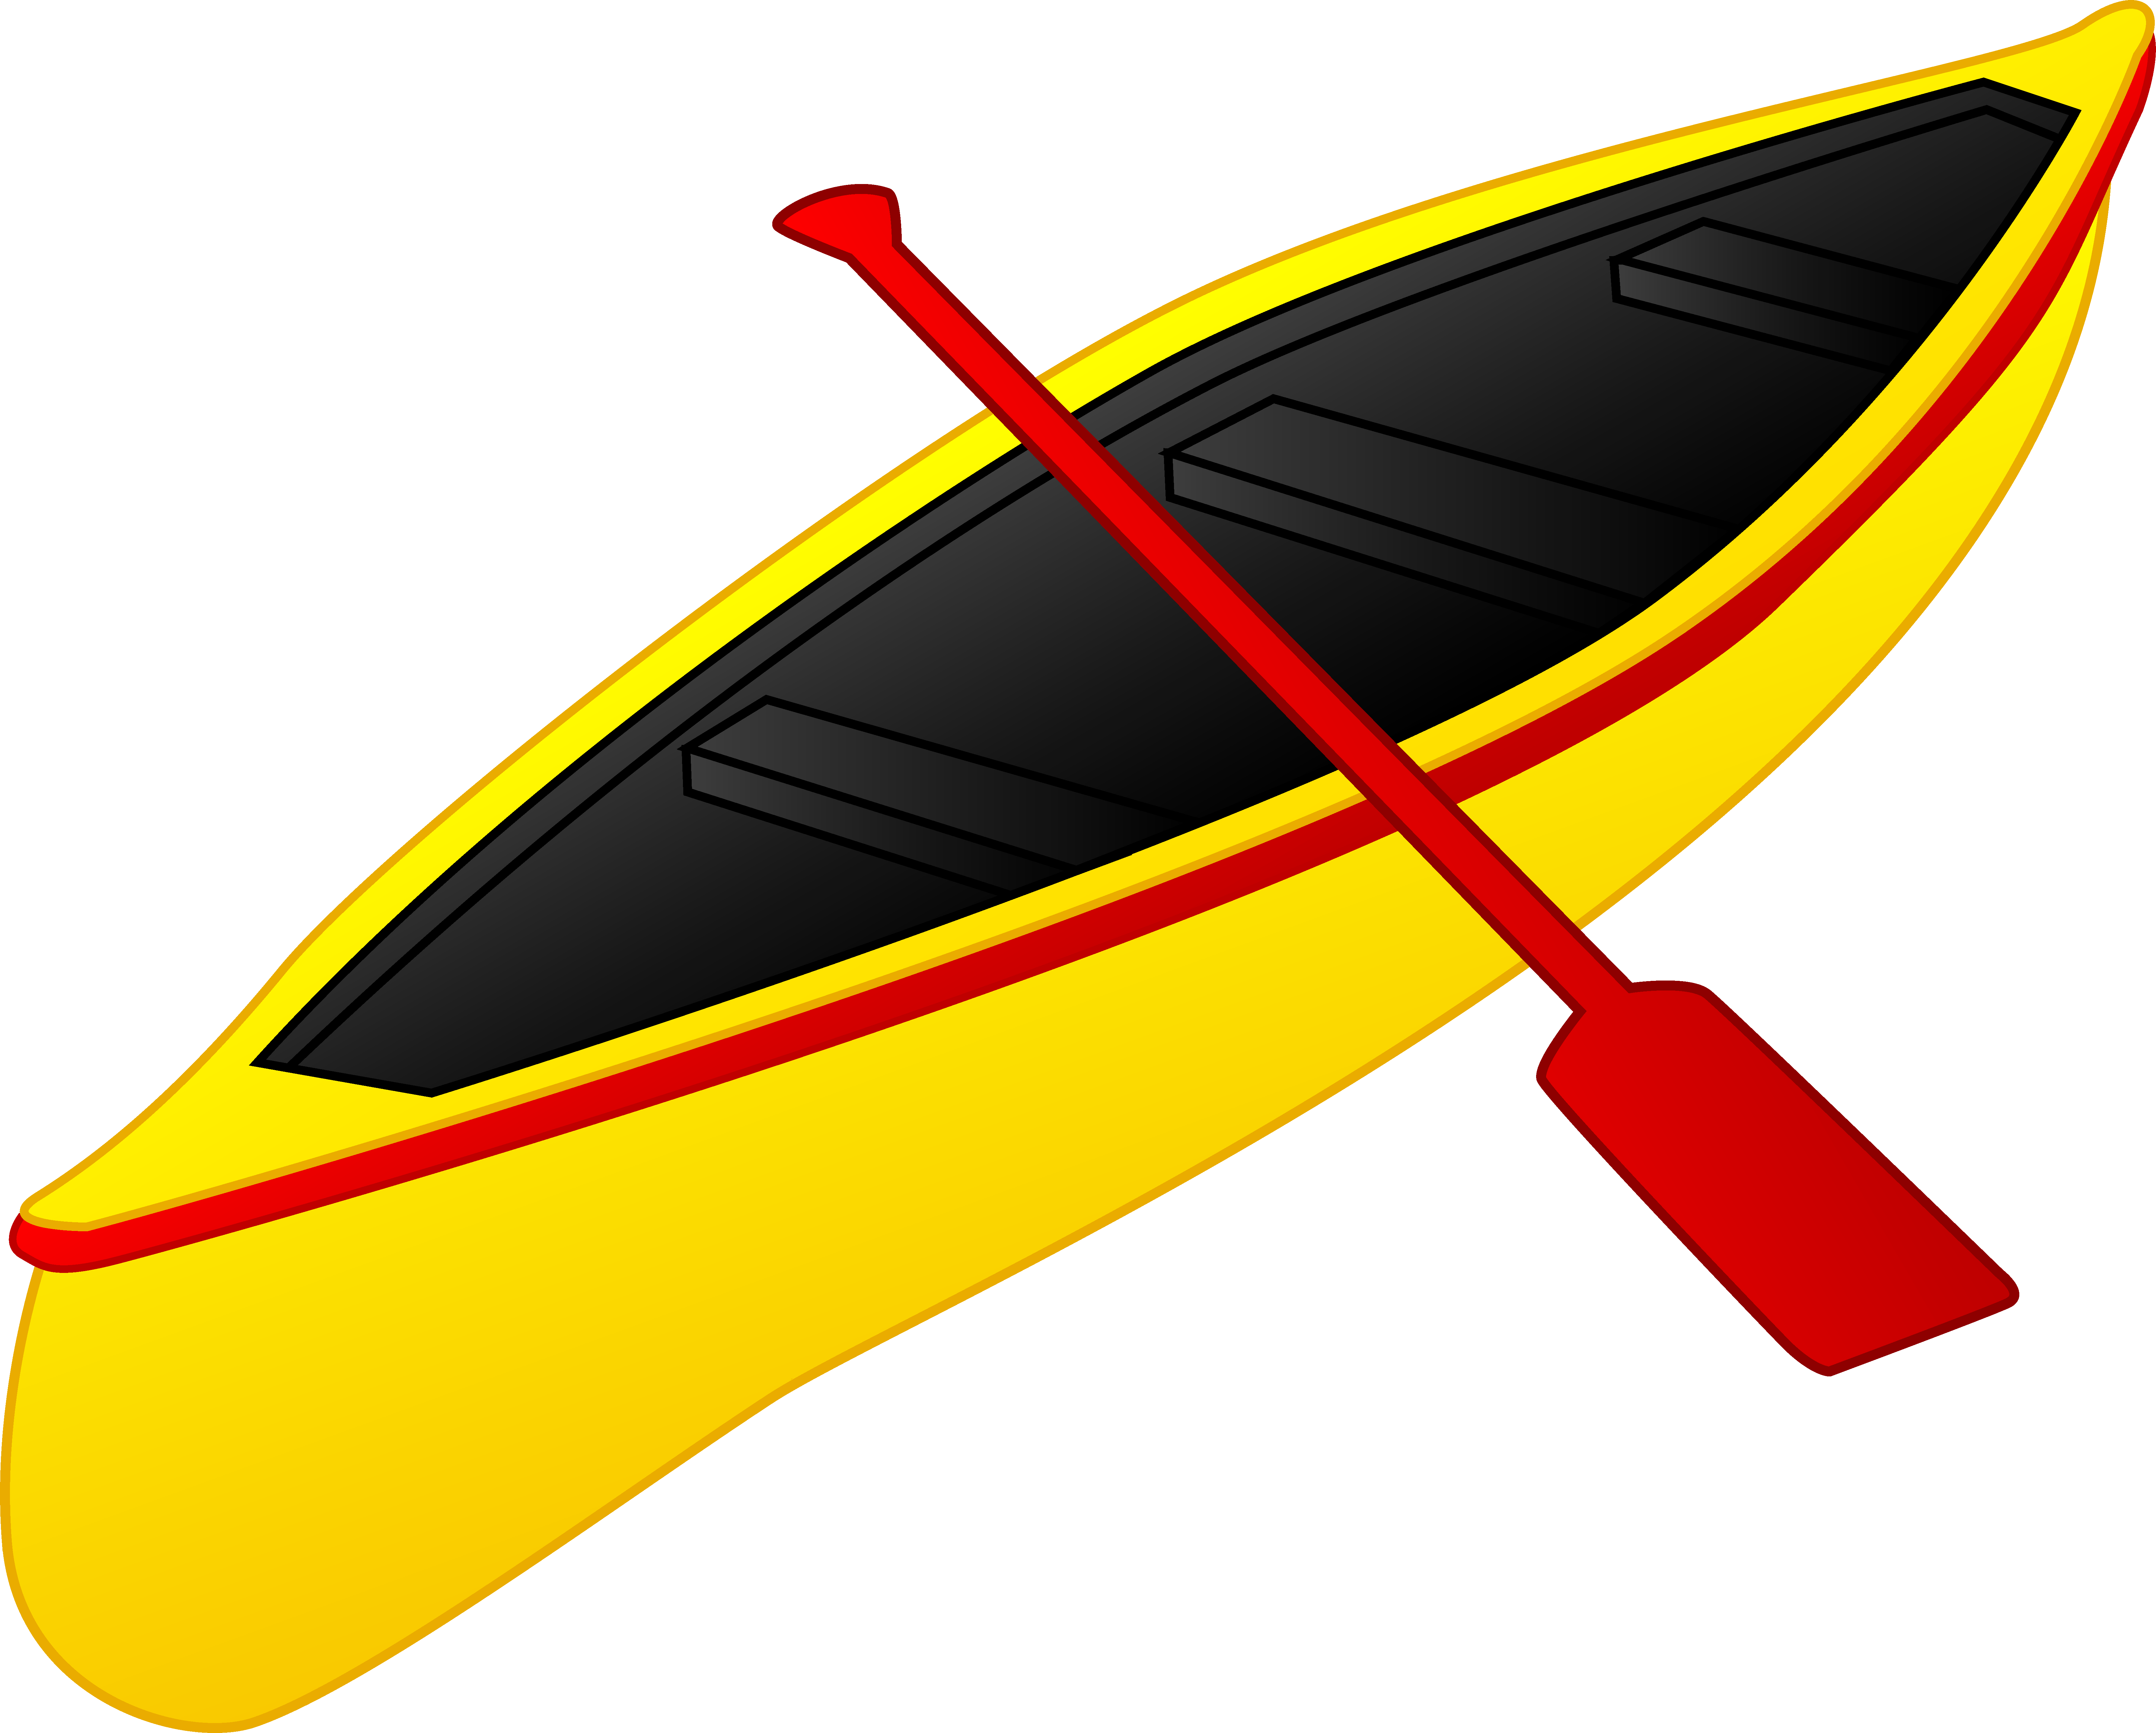 Kayaking clipart canoe trip. Kayak dollar cliparts free